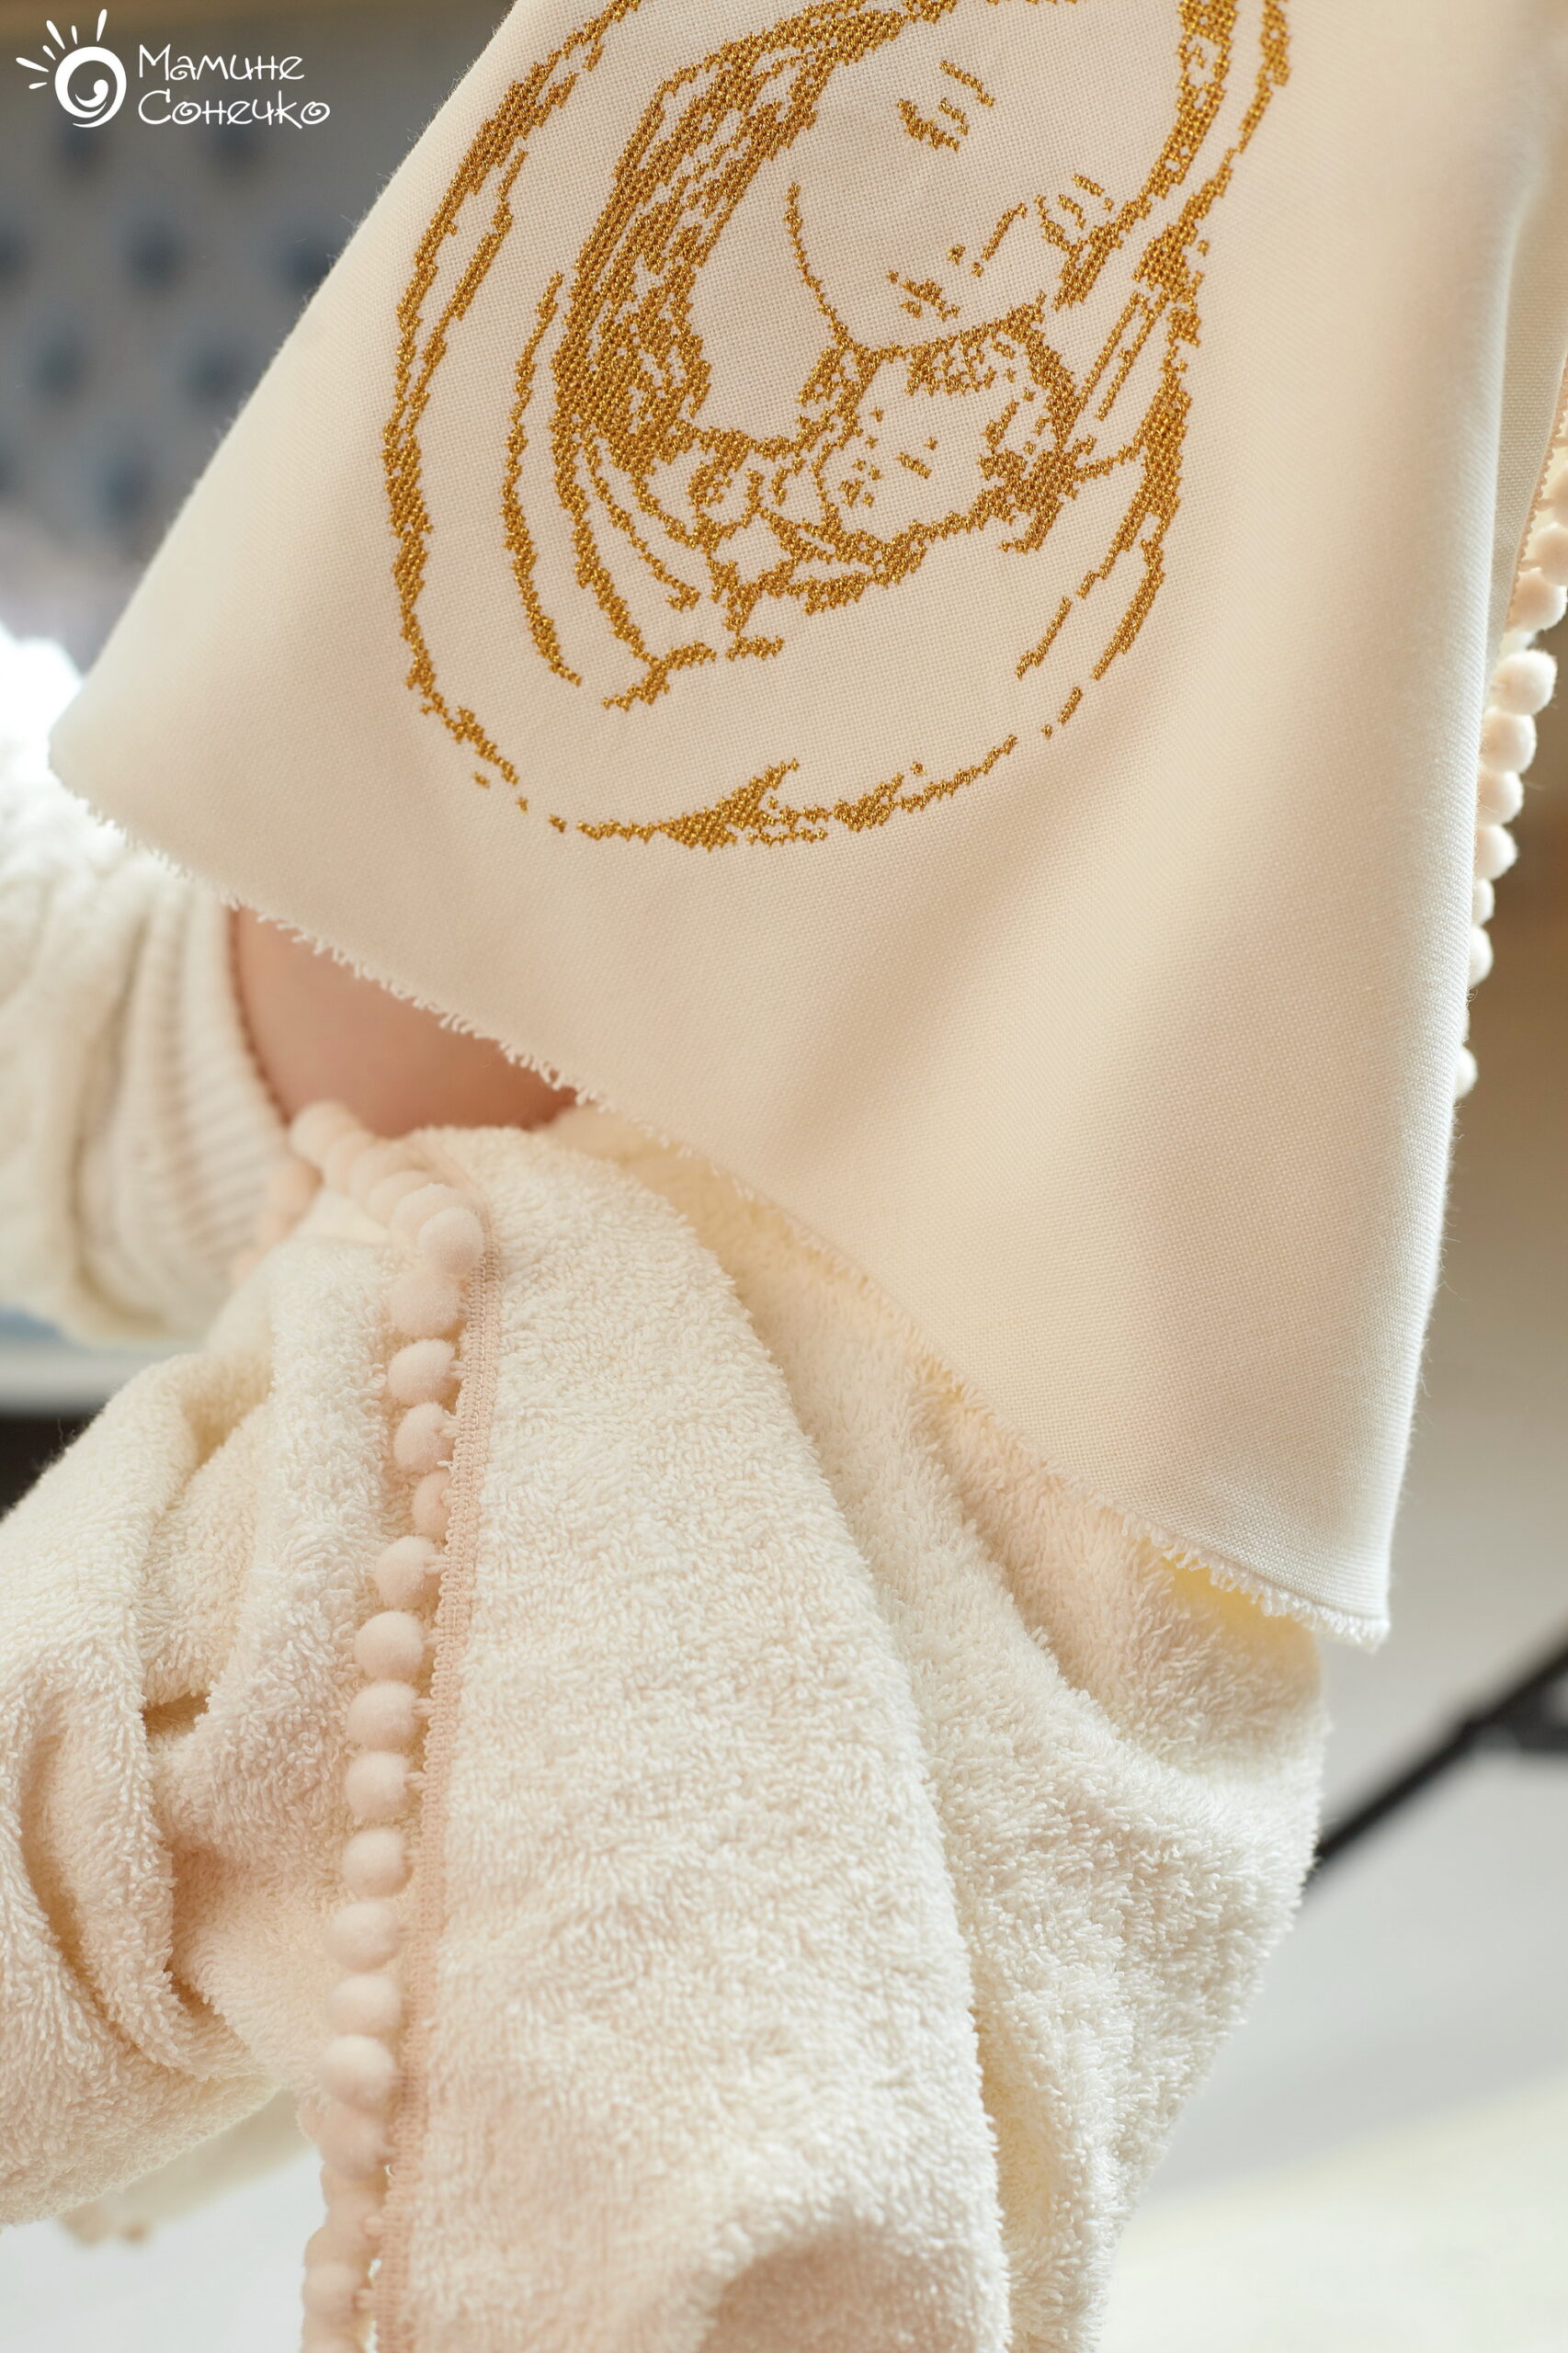 Baptismal towel “Virgin Mary” gold, ivory bath terry